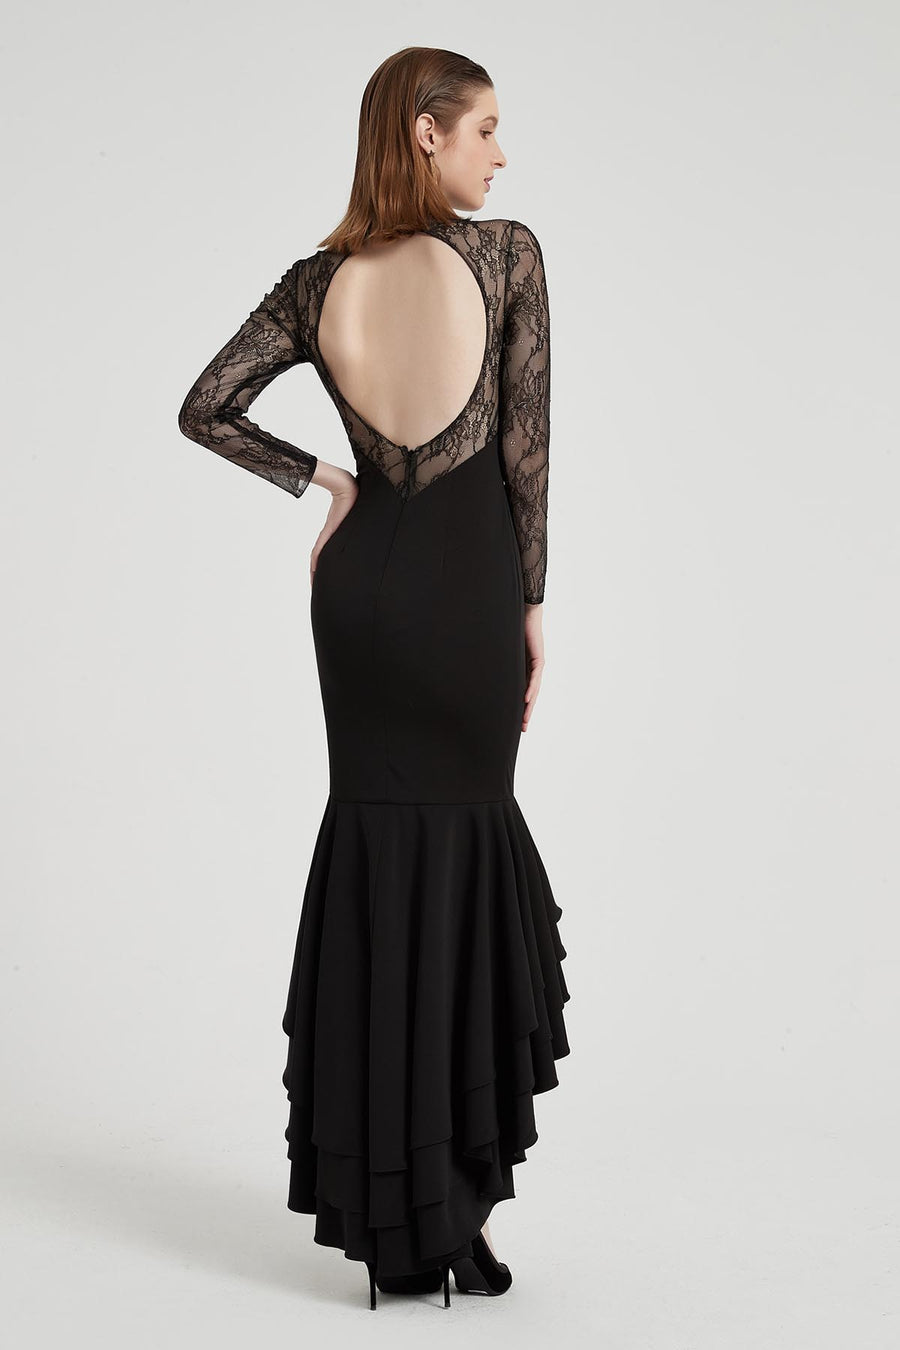 Mermaid/Trumpet Round Long Sleeves Tea Length Lace Promo Dresses